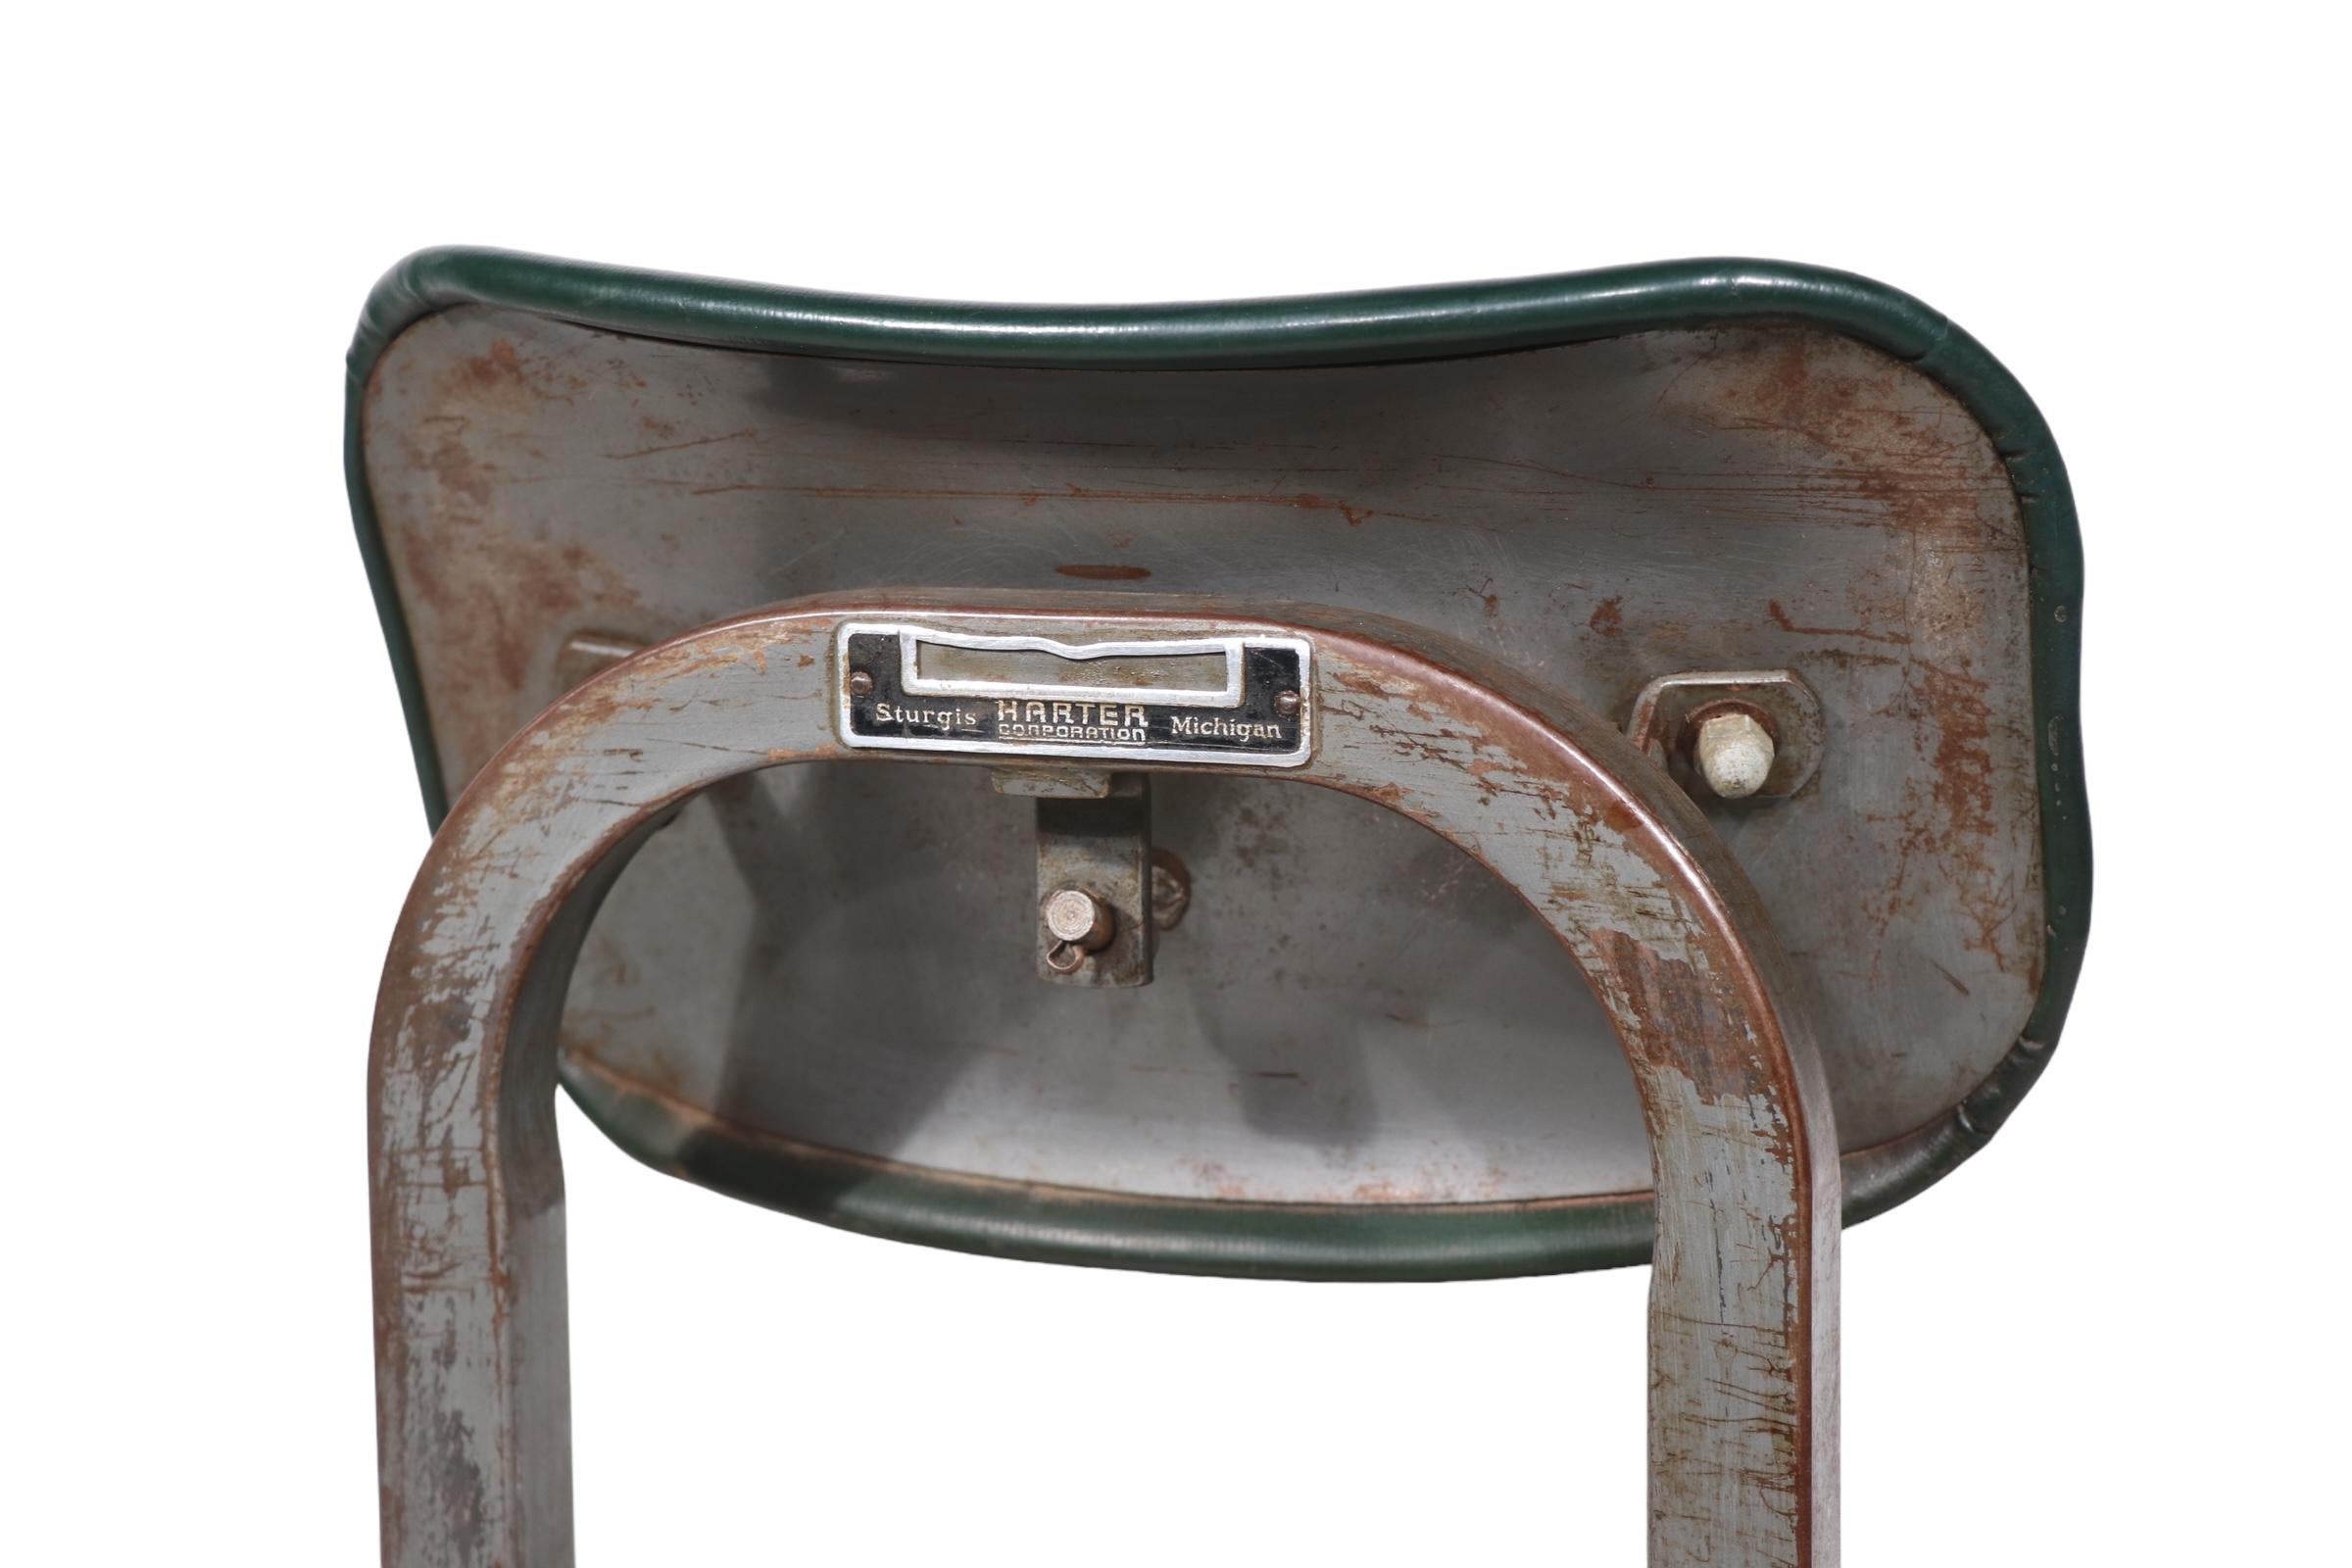 Art Deco Industrial Swivel Tilt Armless Desk Chair by Harter Corporation 1930/40 For Sale 6